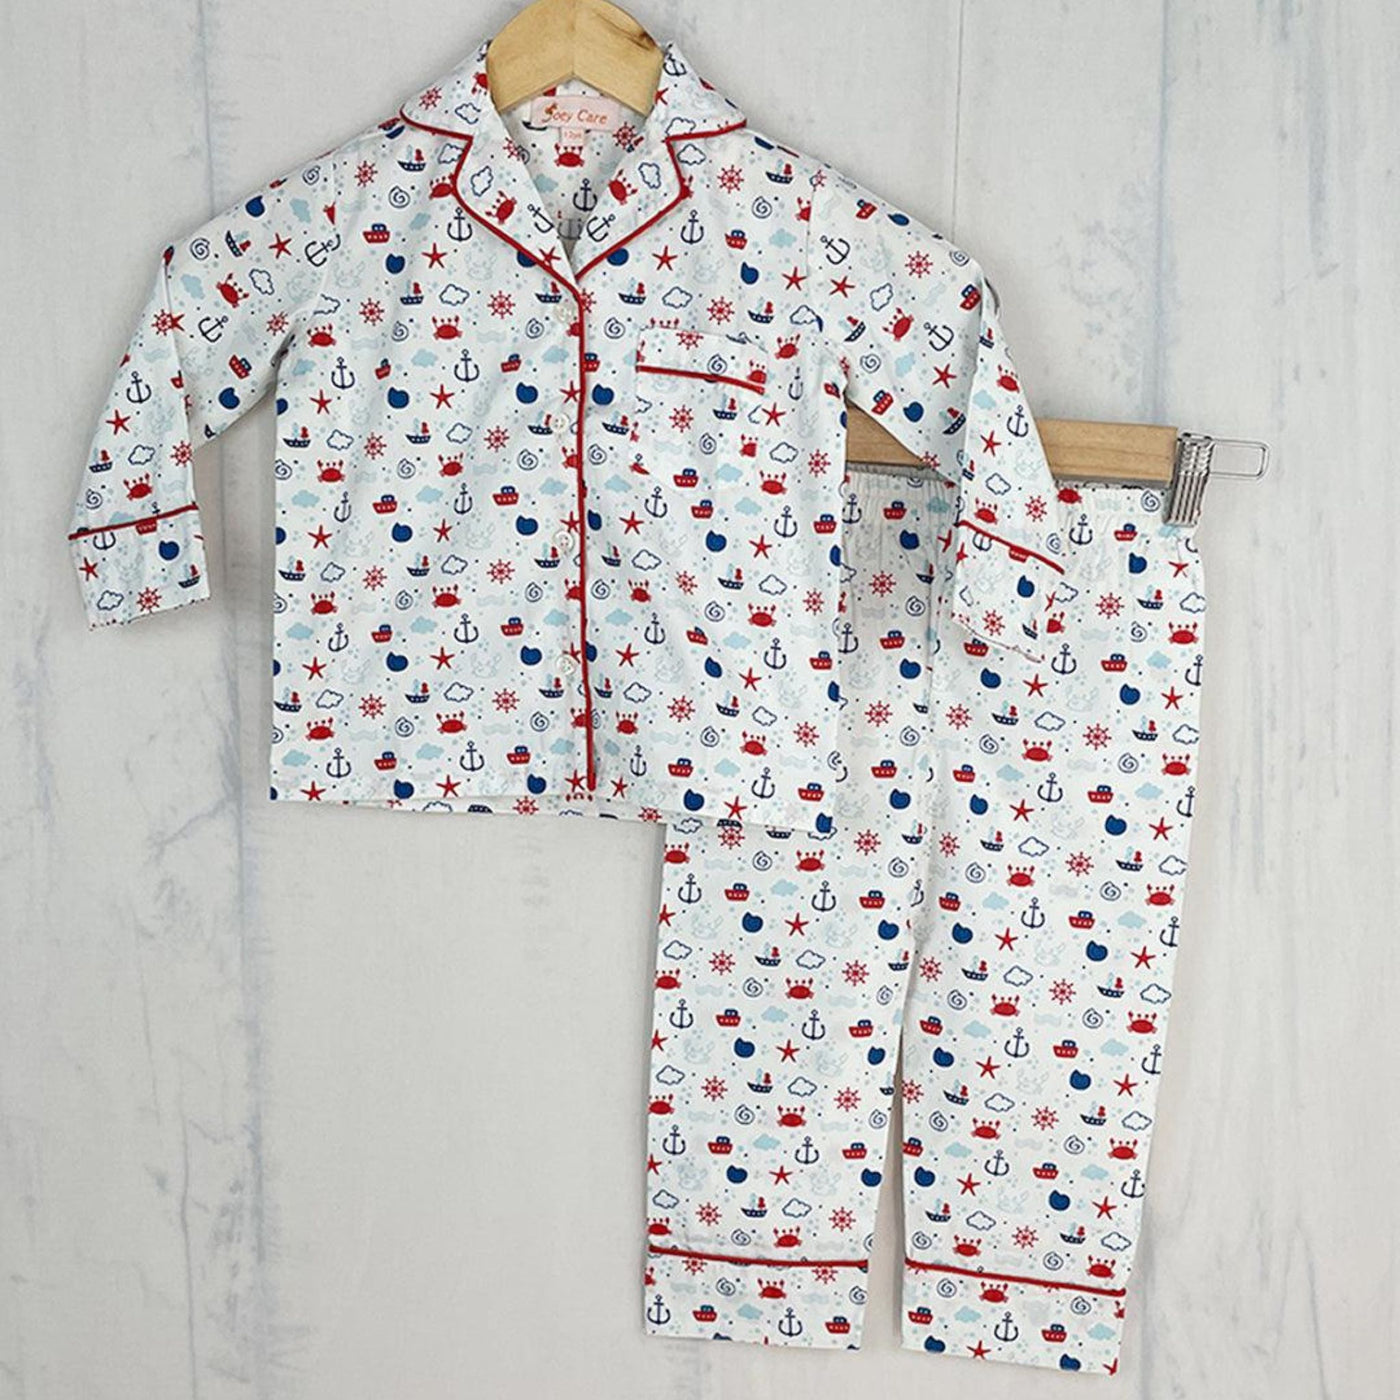 Pocket Nightwear for Girls and Boys - Ship print Joeycare 